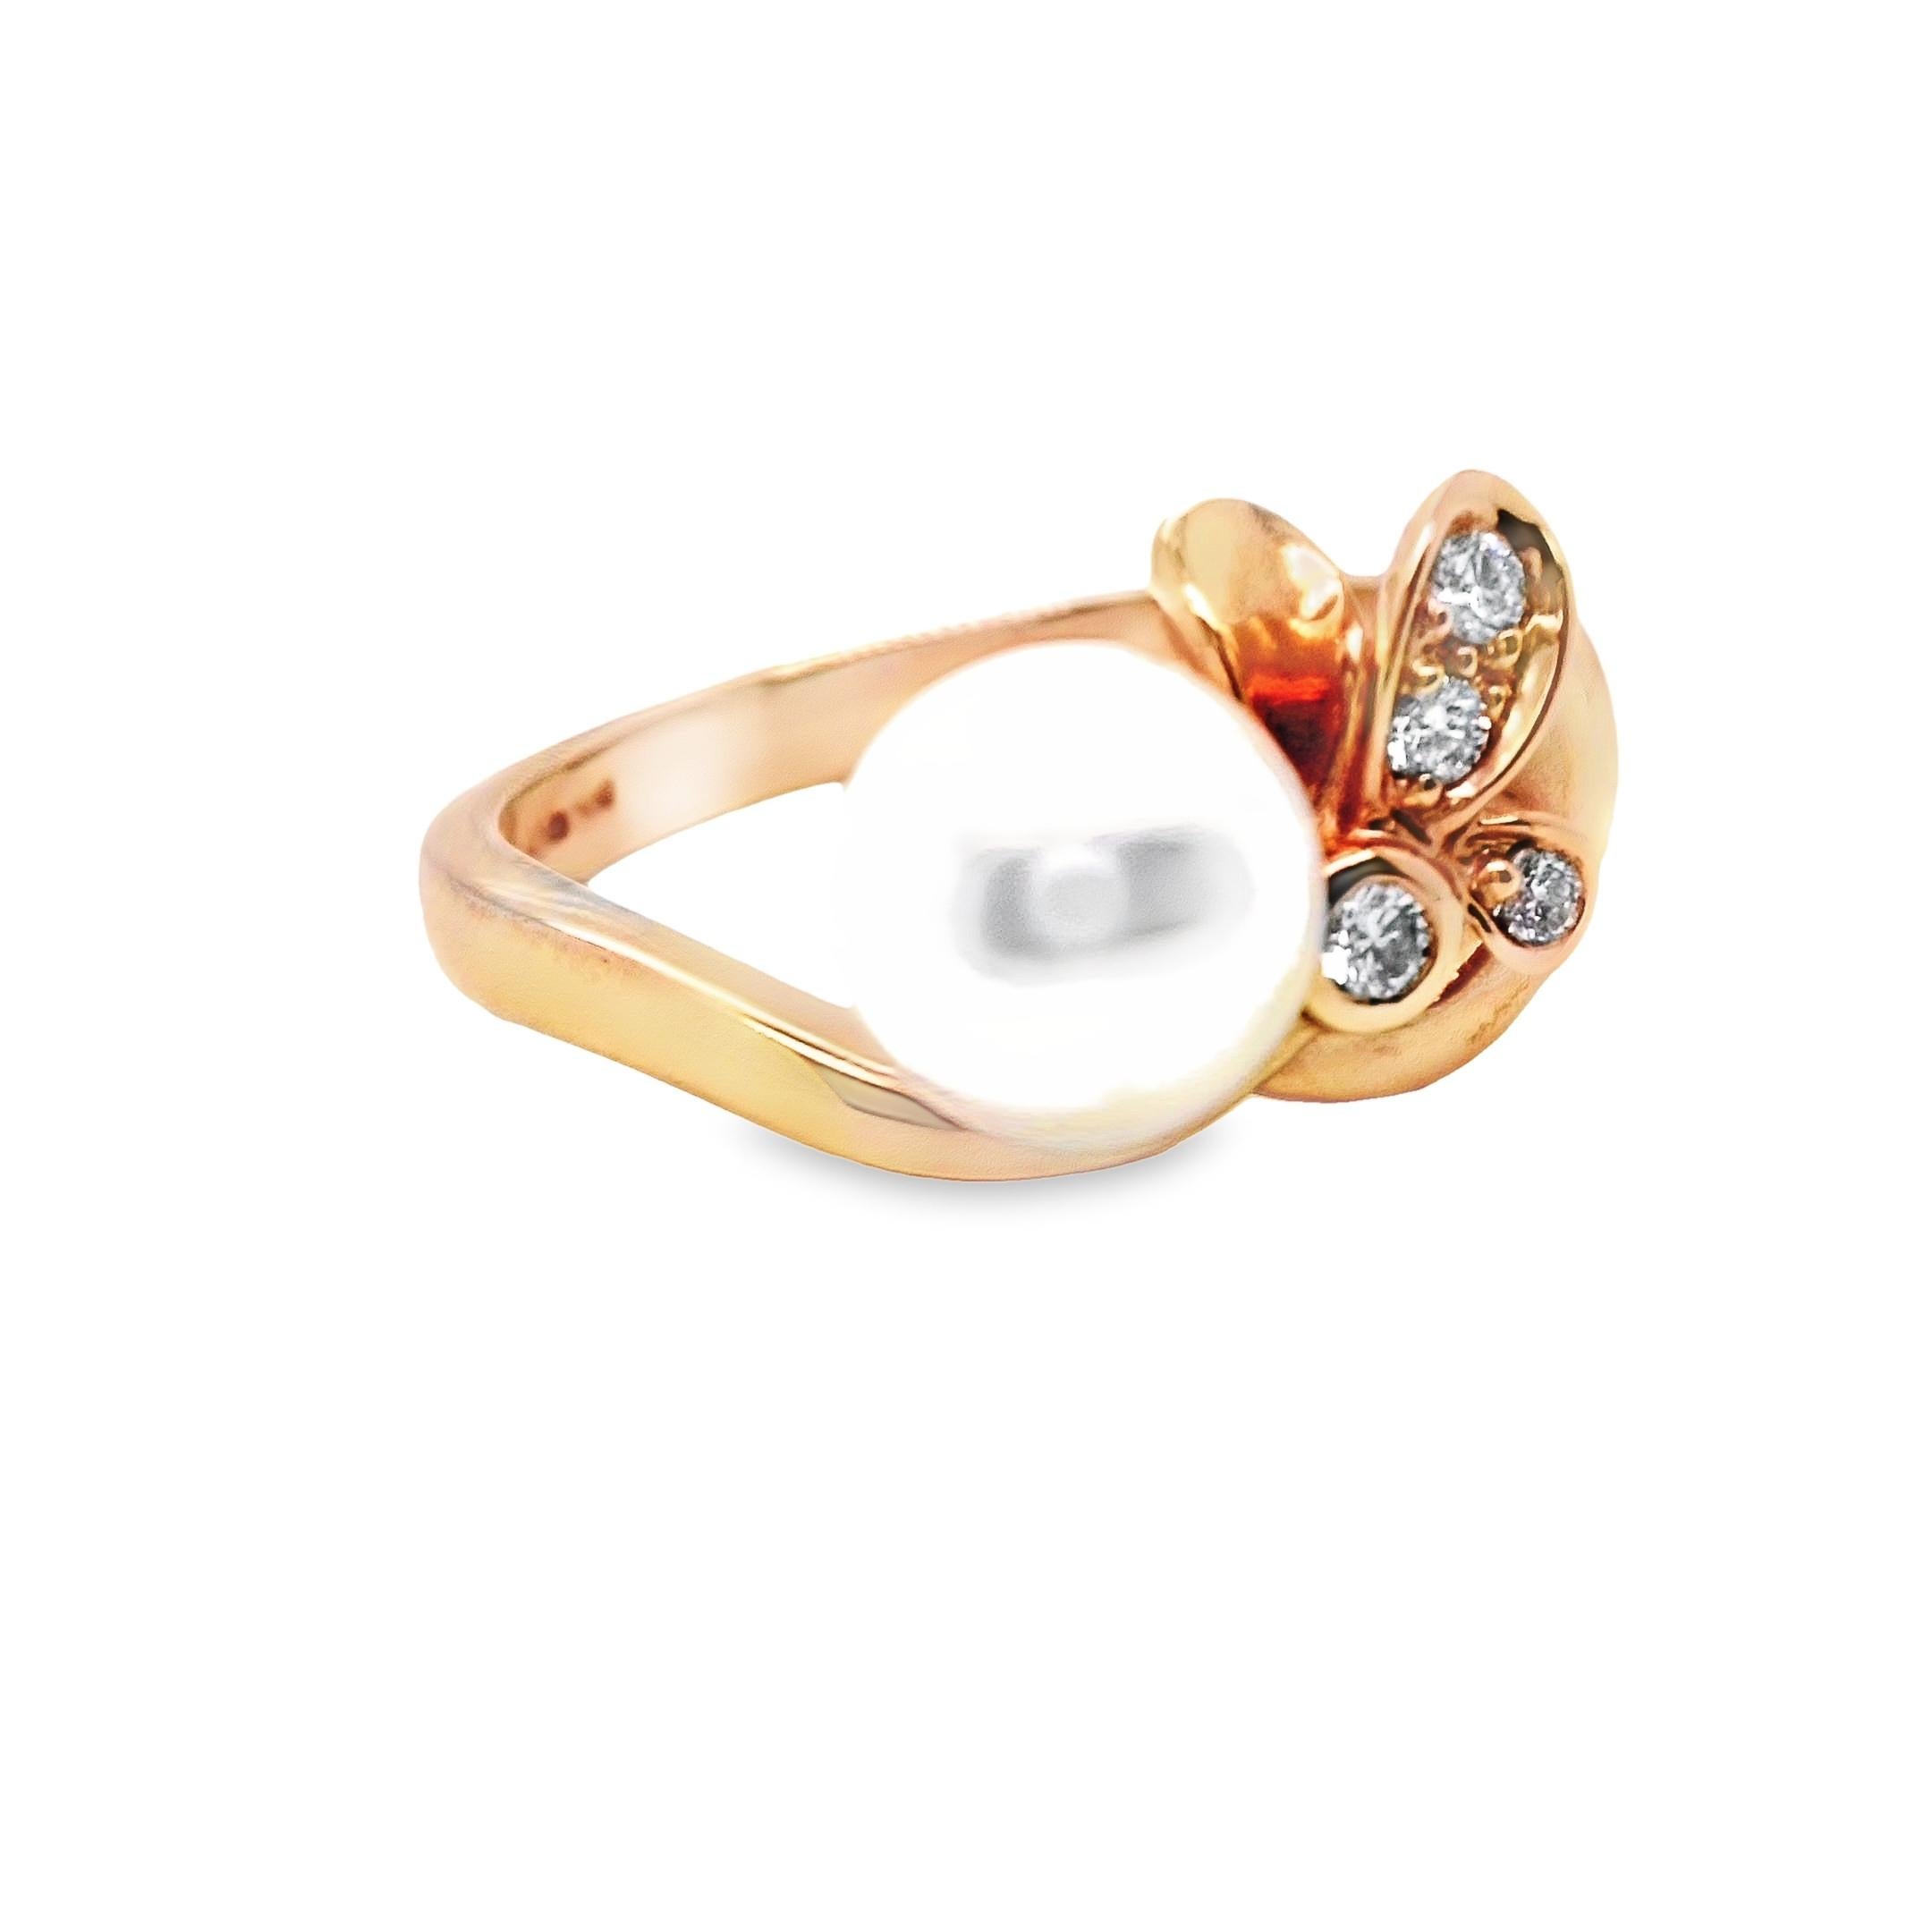 Mikimoto rose gold Pearl & Diamond ring PRH5473Z2 For Sale 3